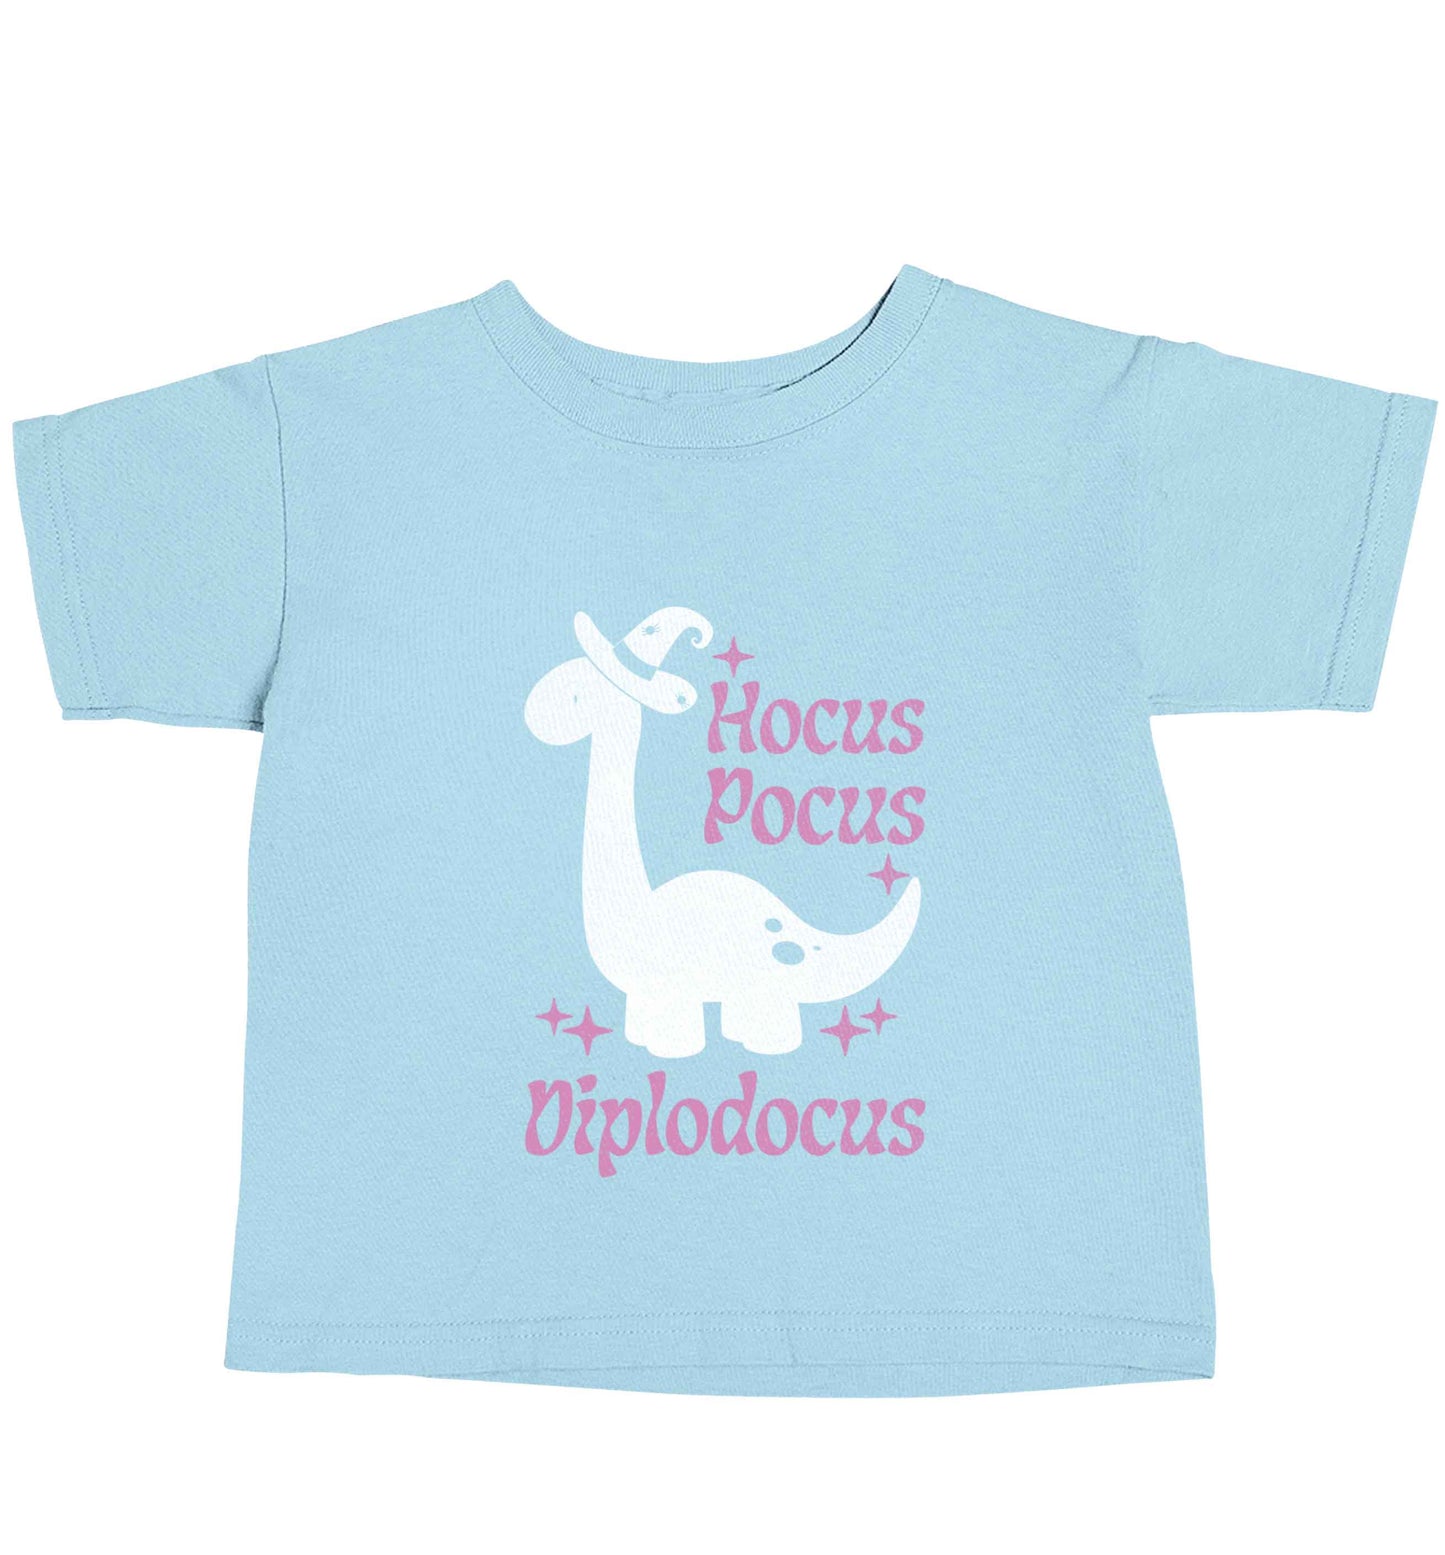 Hocus pocus diplodocus Kit light blue baby toddler Tshirt 2 Years